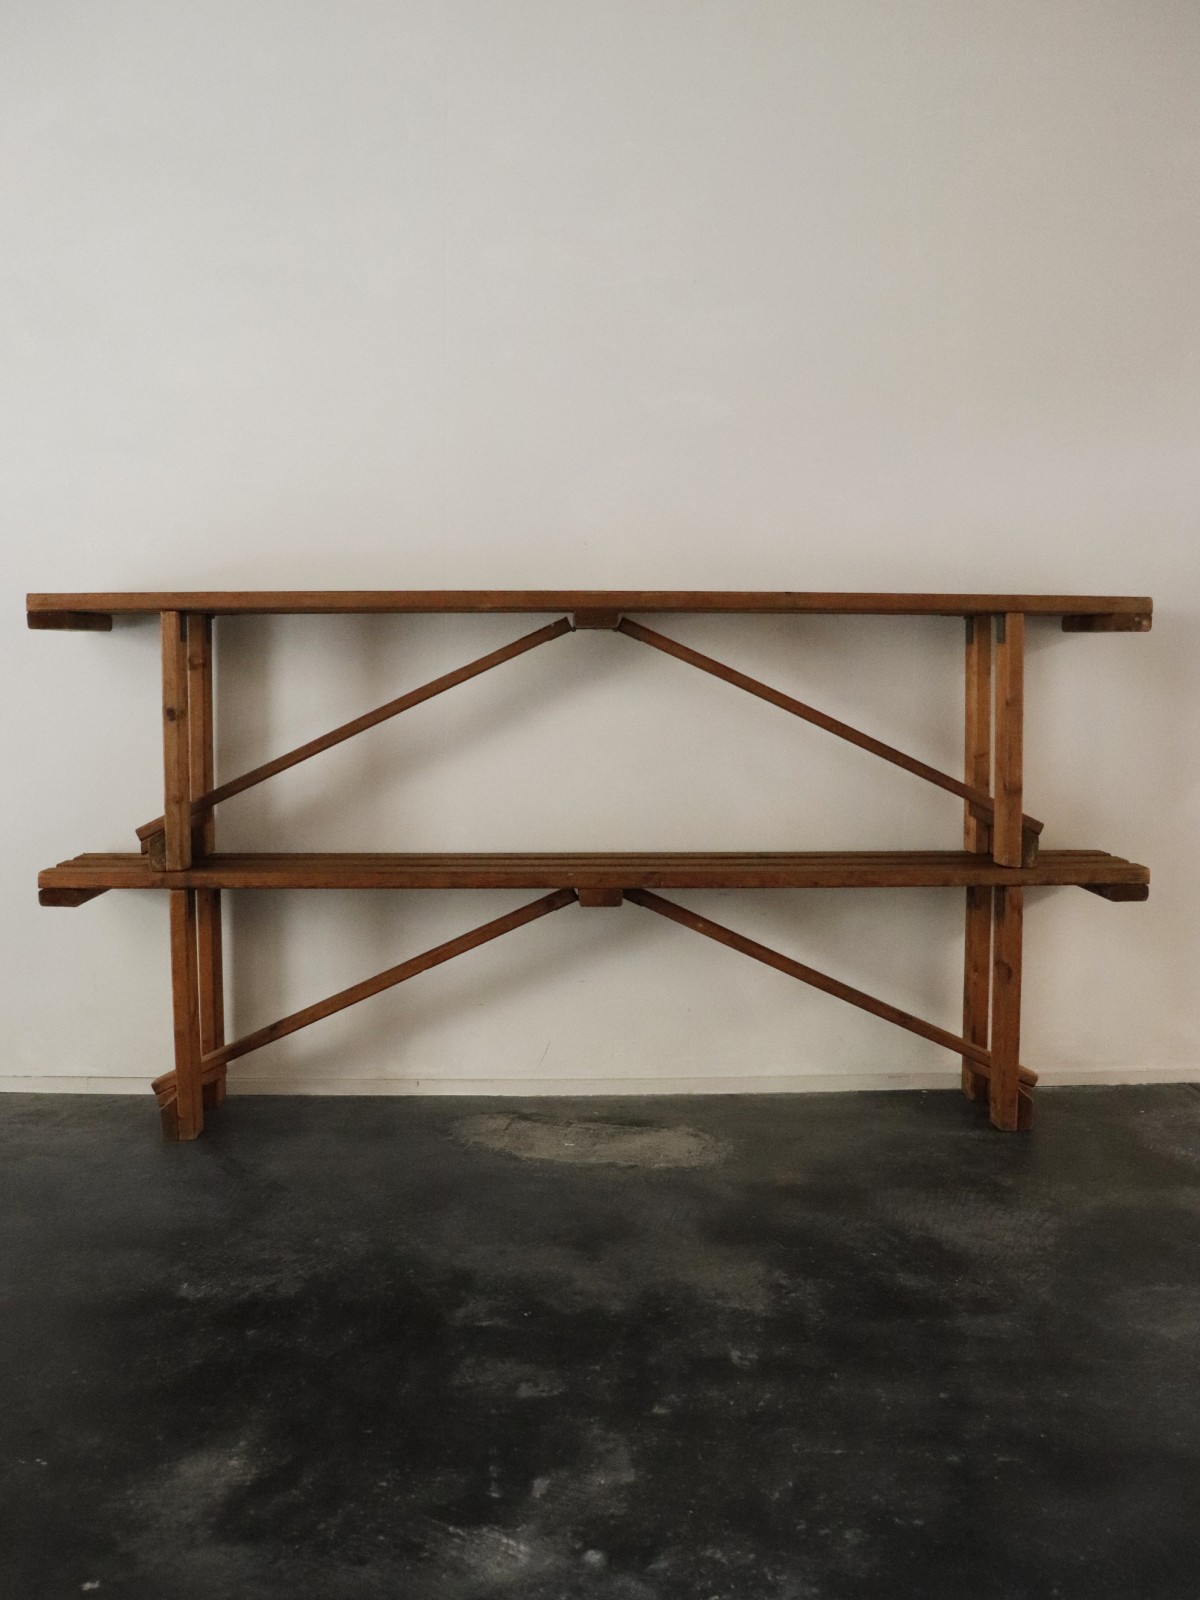 1930’s, folding bench, wood bench